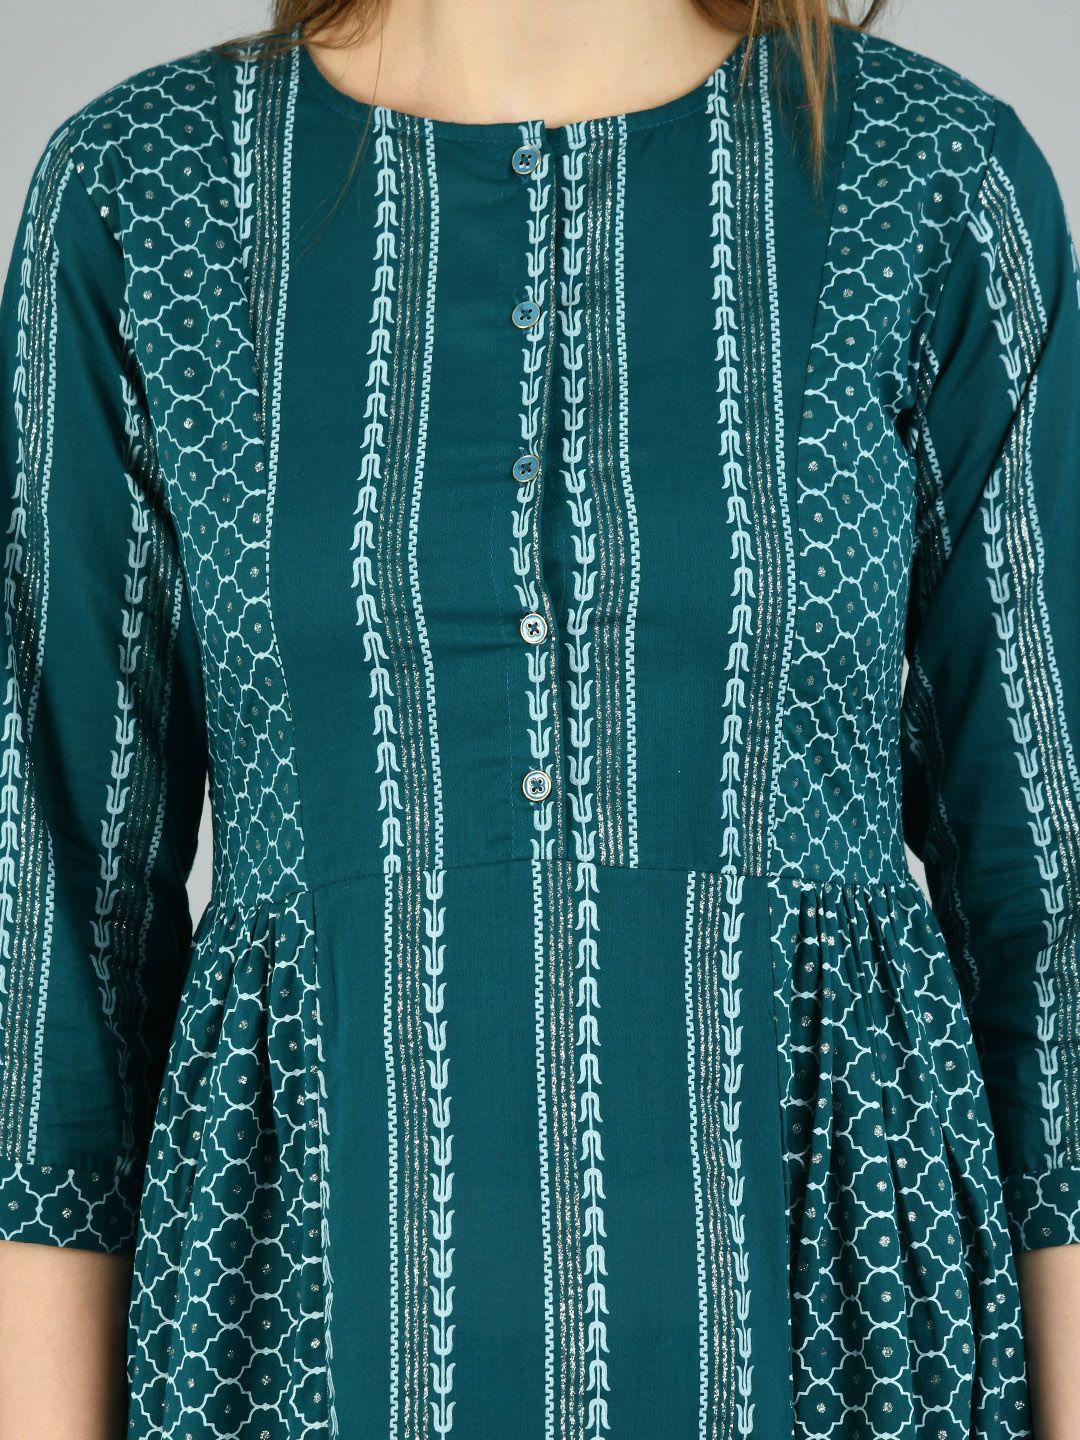 Women's Green Cotton Printed 3/4 Sleeve Round Neck Casual Dress - Myshka